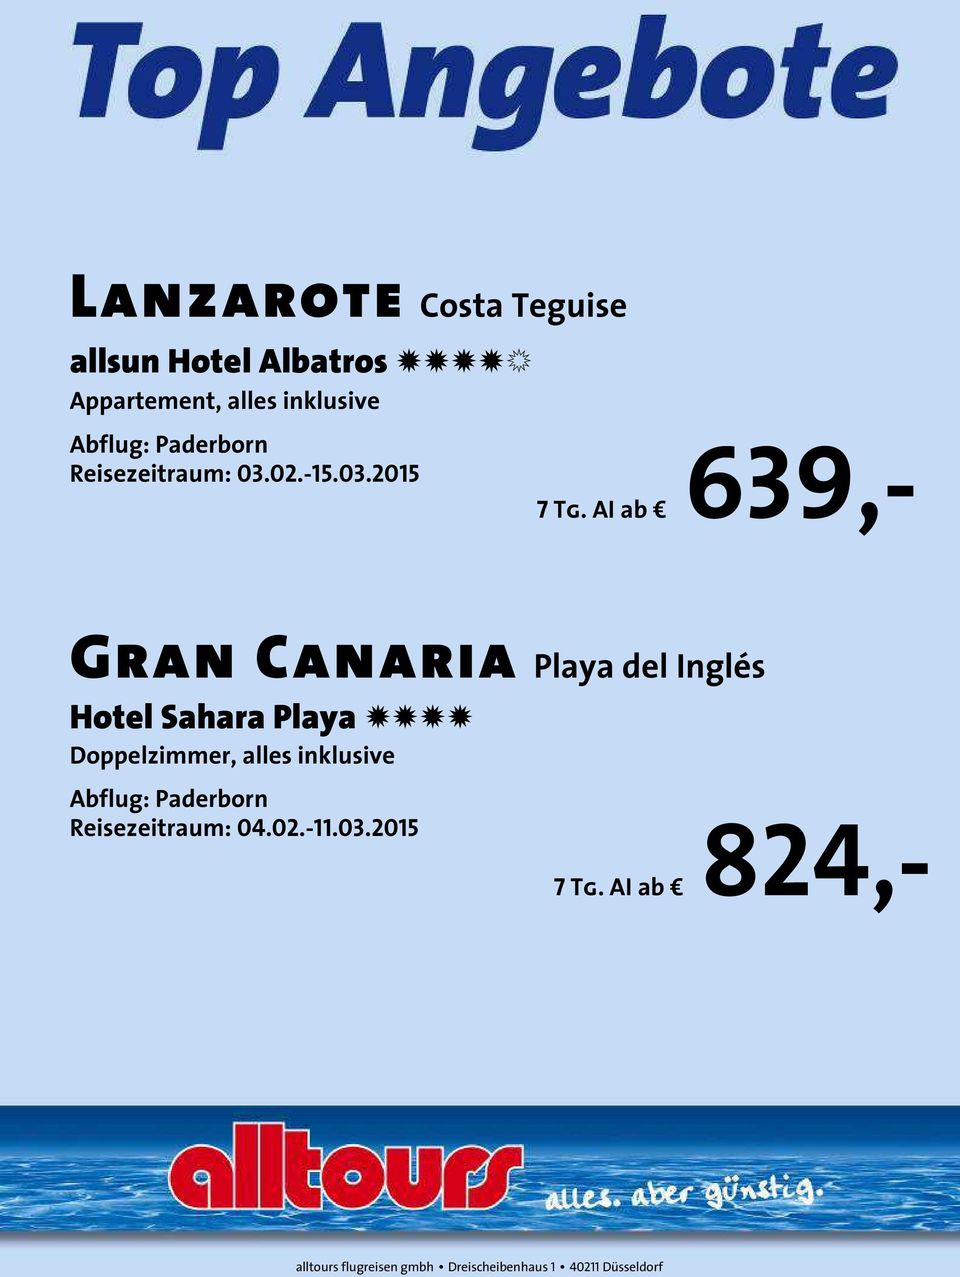 AI ab 639,- Gran Canaria Playa del Inglés Hotel Sahara Playa NNNN